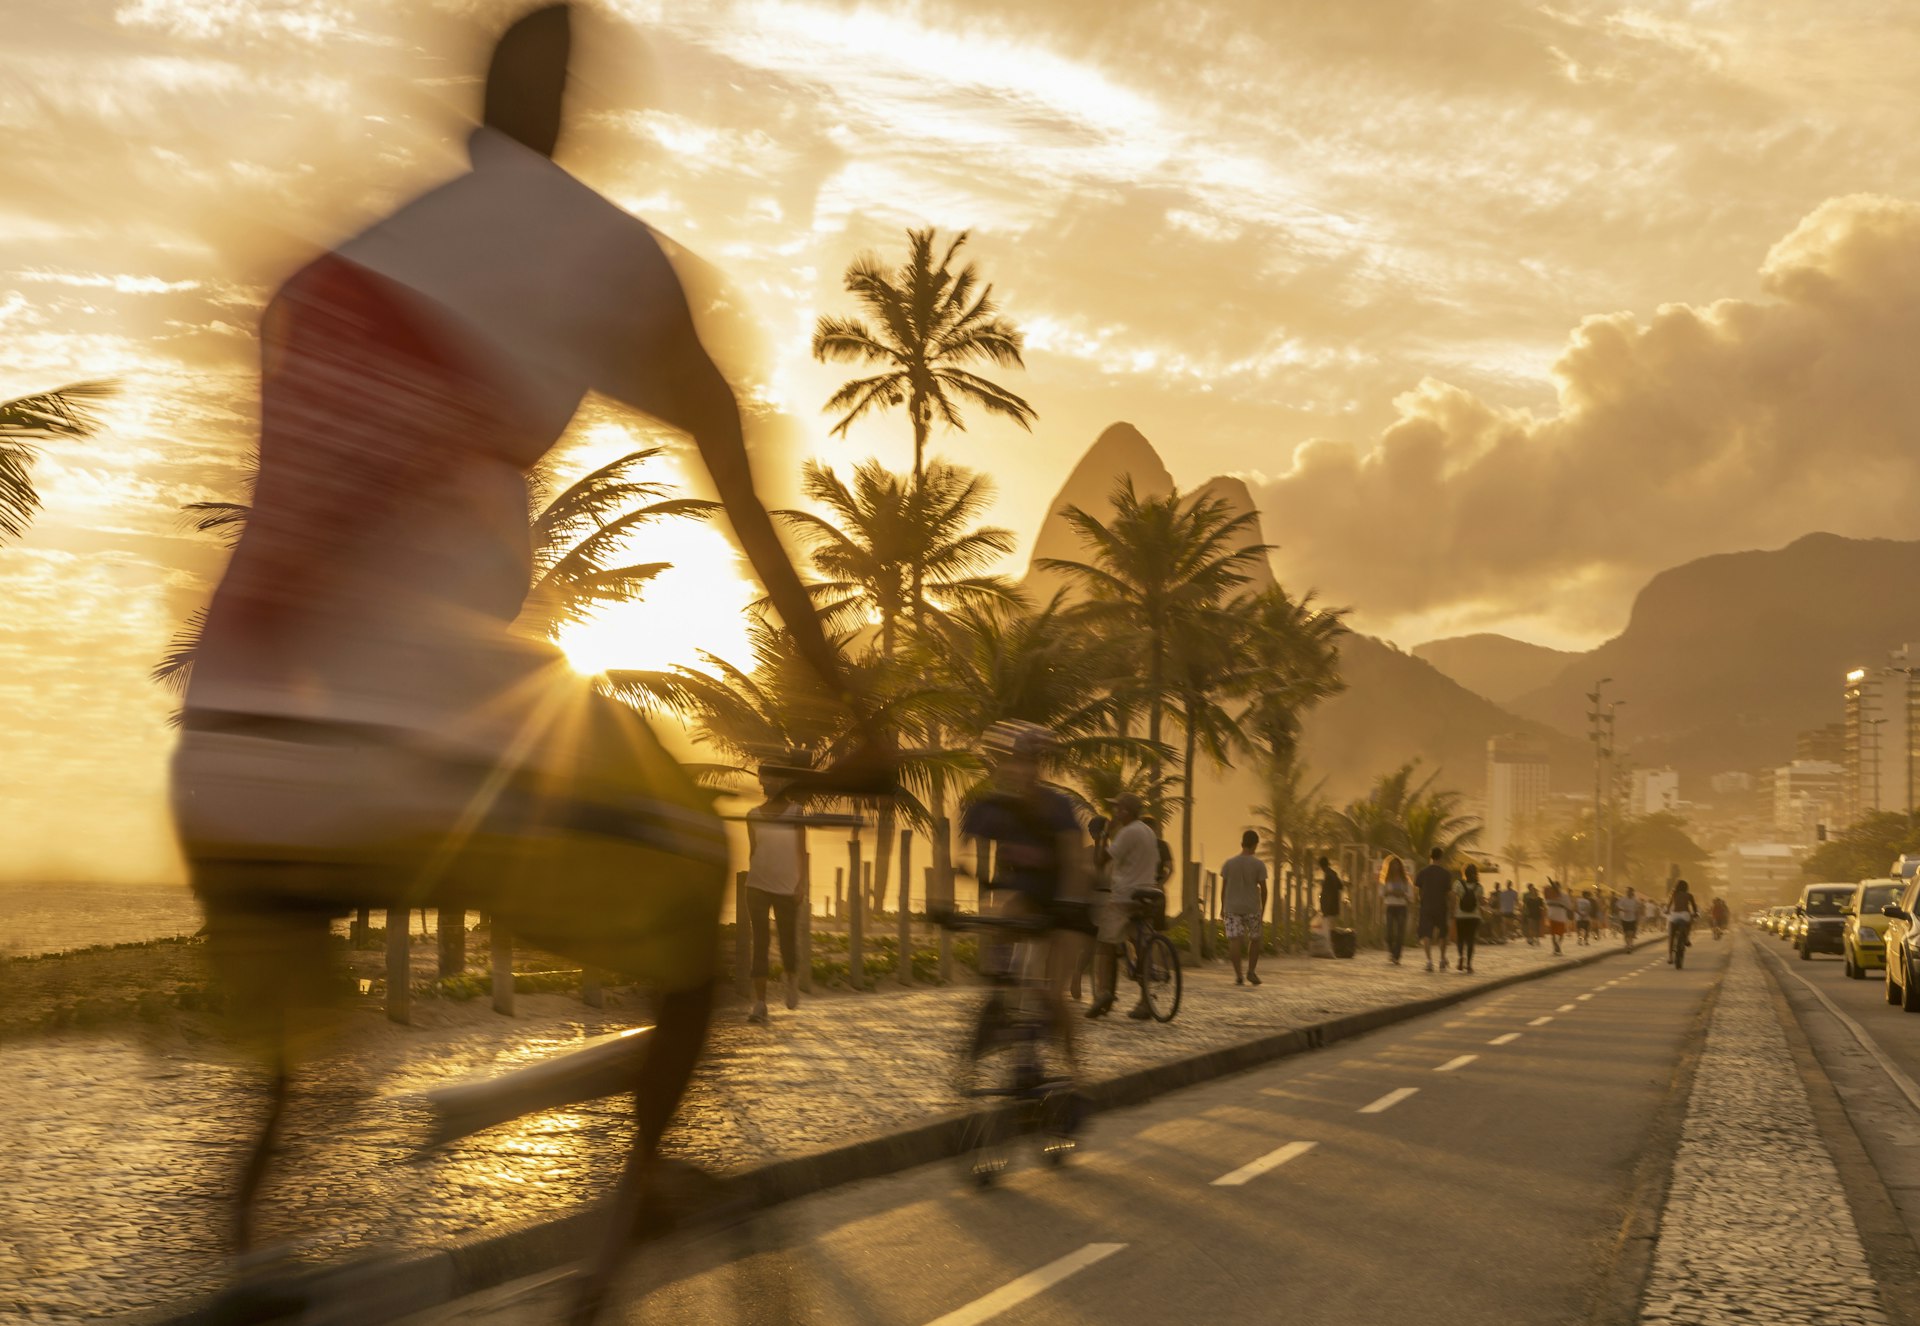 People ride bikes along Ipanema Beach at sunset